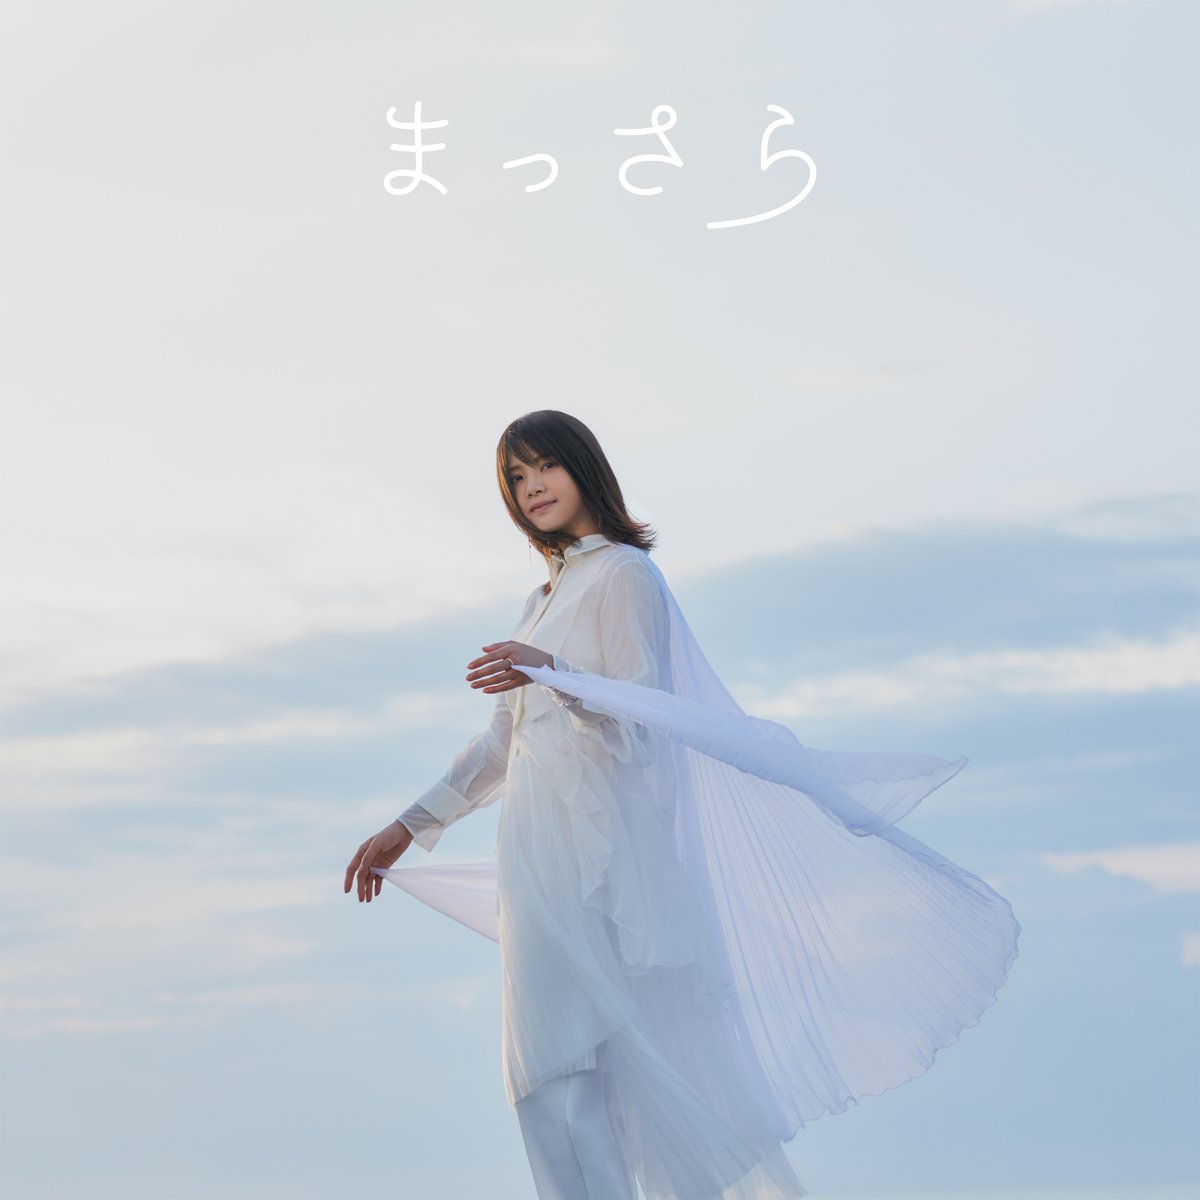 Cover art for『Kiyoe Yoshioka - Natsuiro no Omoide』from the release『Massara』